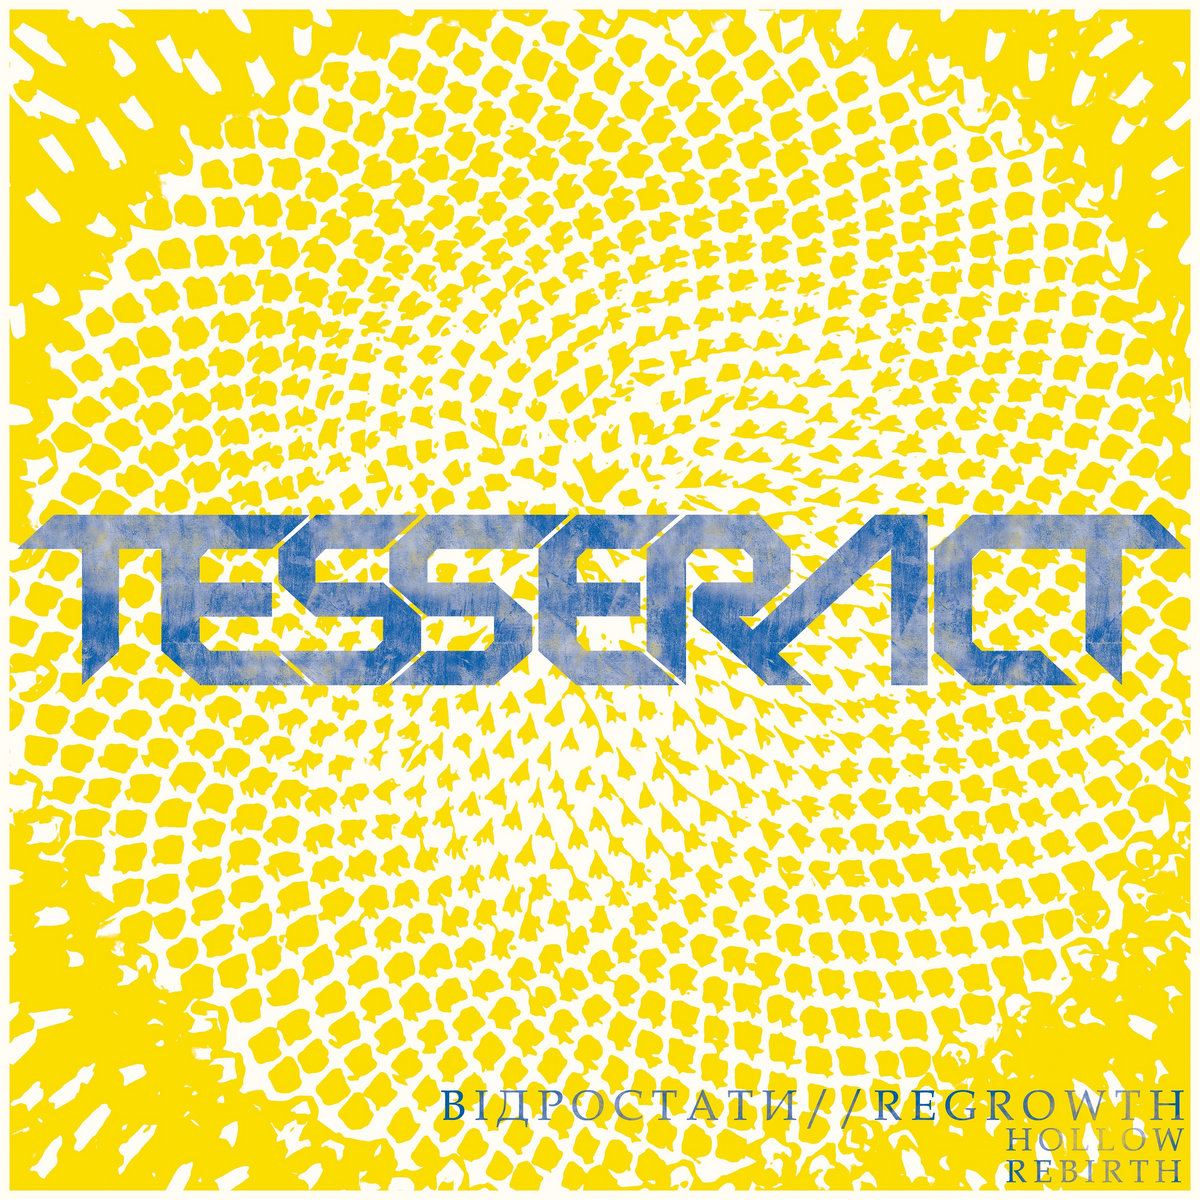 TesseracT_Regrowth